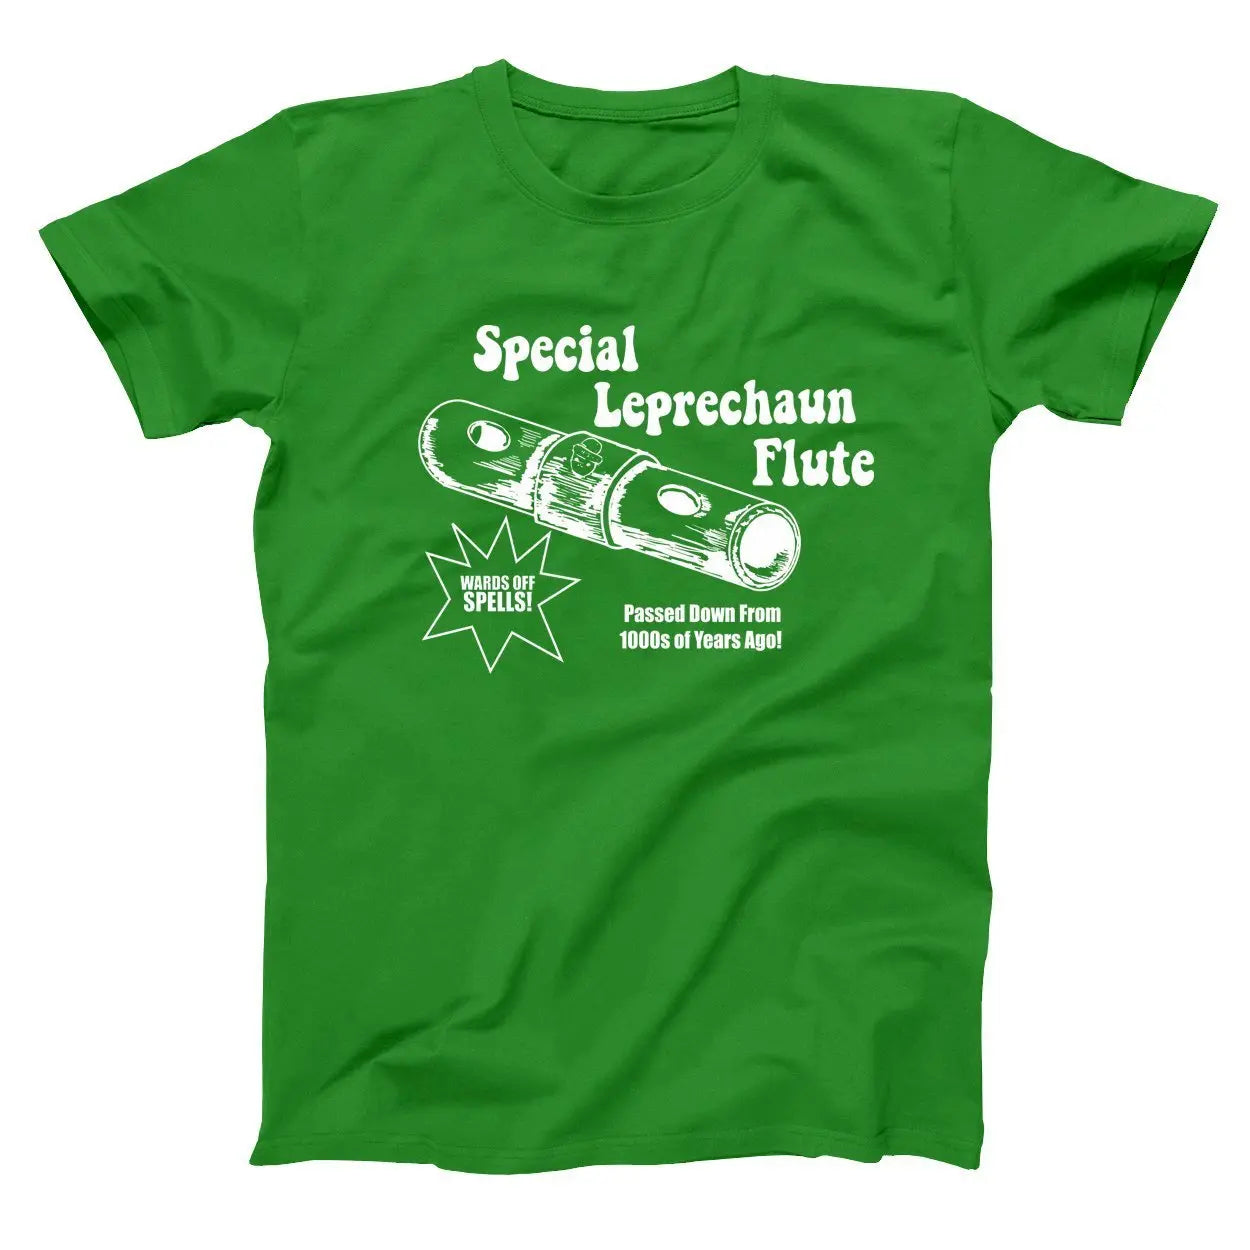 Special Leprechaun Flute Tshirt - Donkey Tees